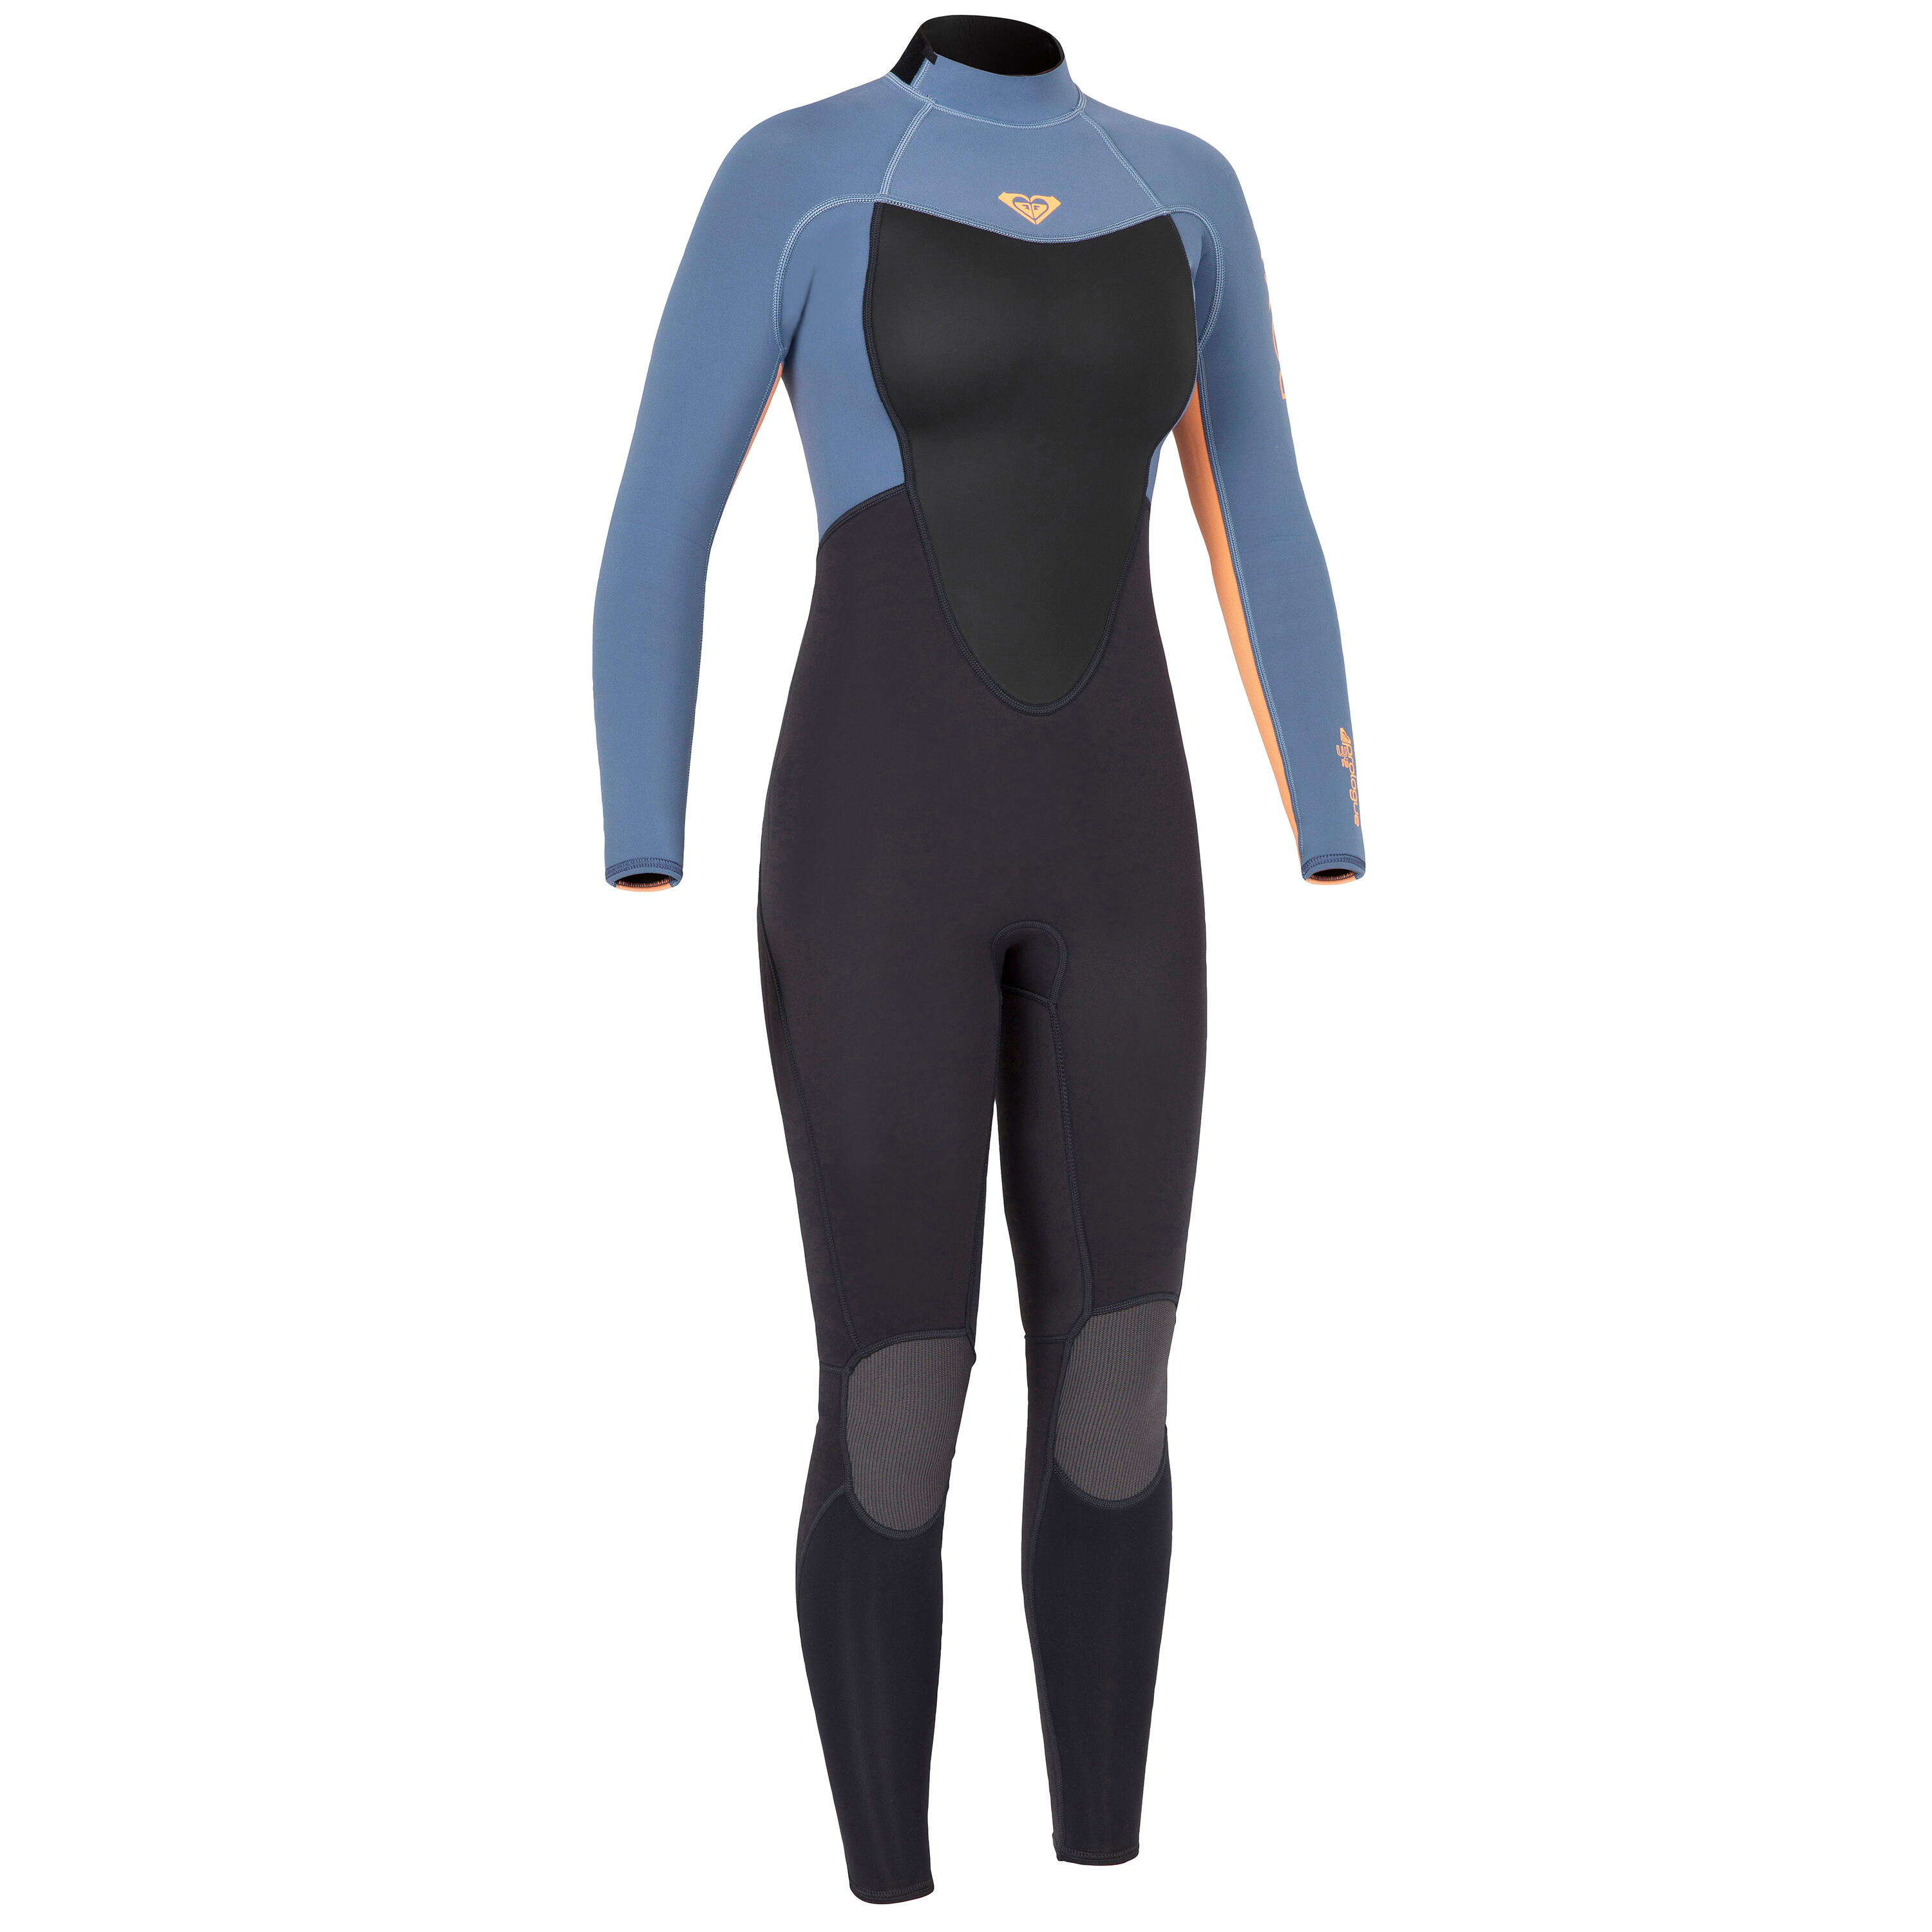 Women’s Surfing Wetsuit Roxy Prologue 3/2 mm - Black/Pastel blue 1/7